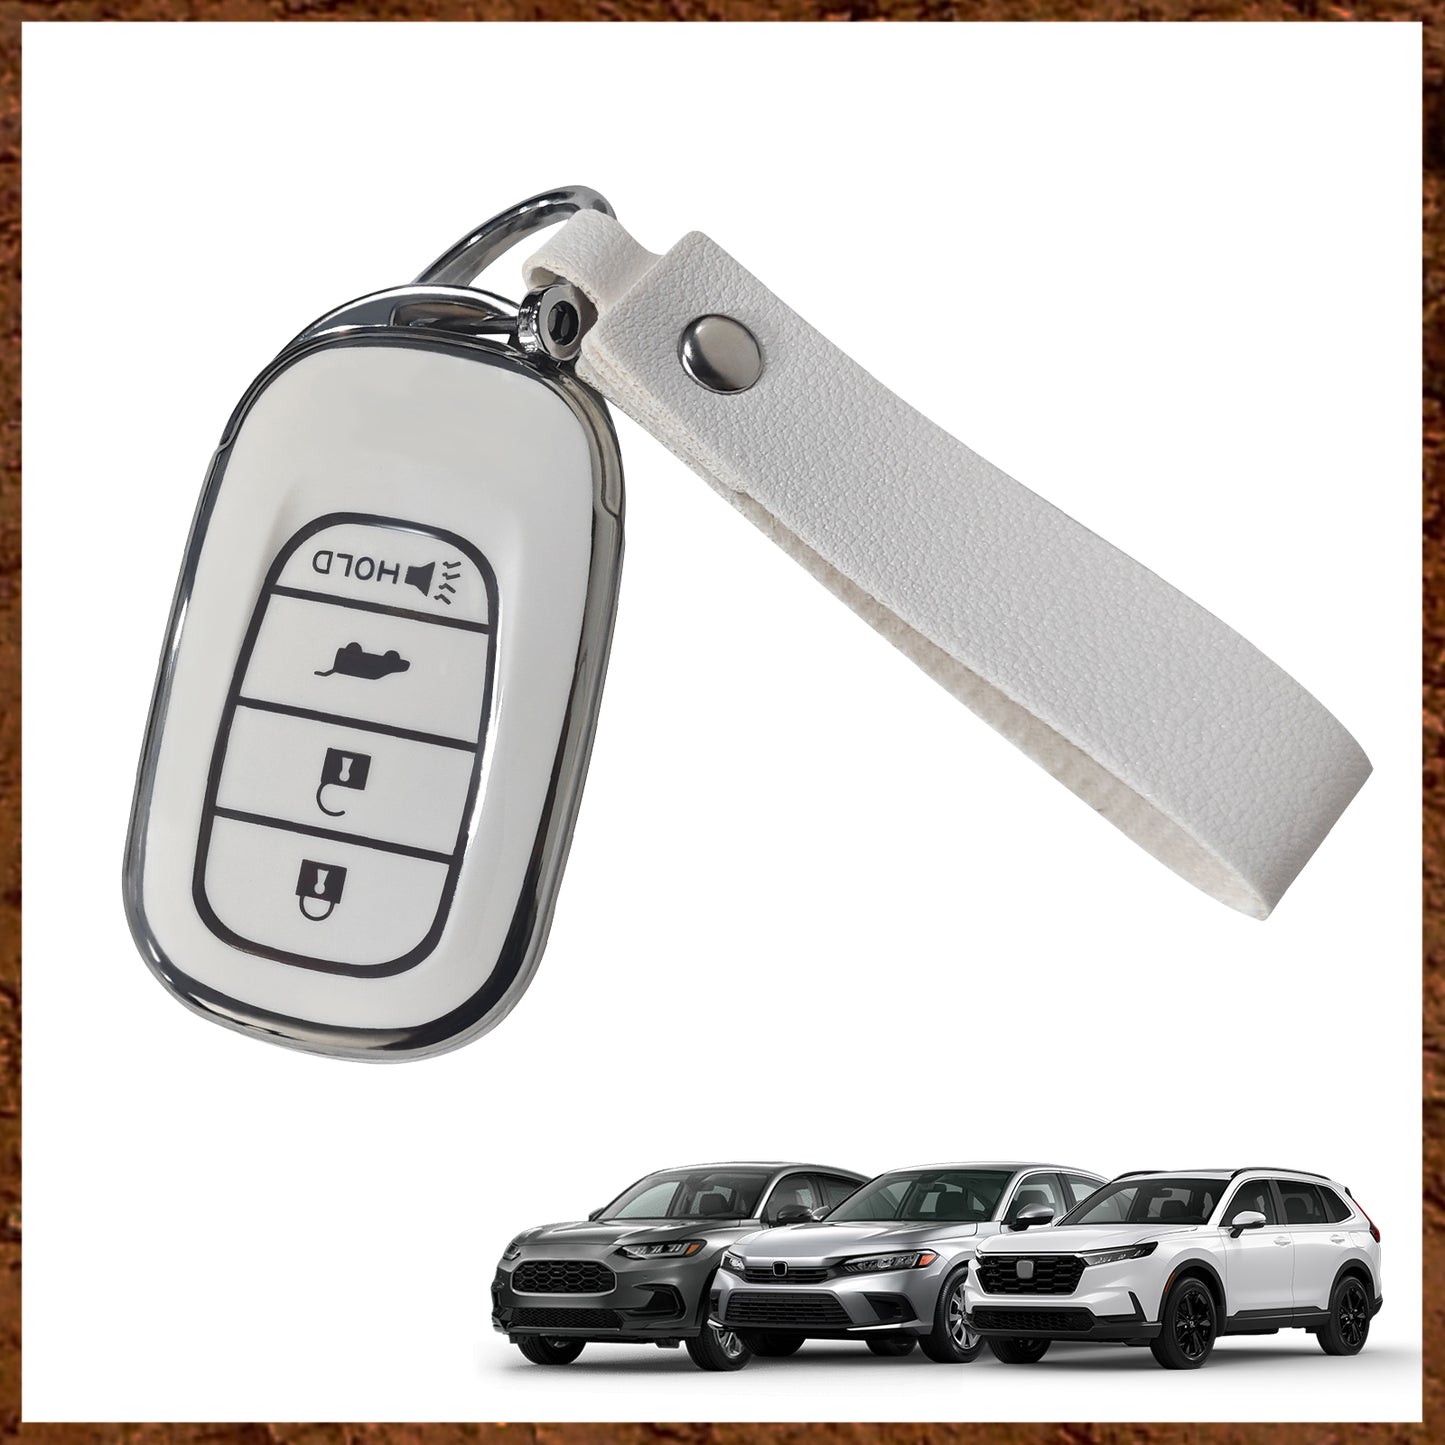 4-Button Key Fob Cover for CRV Civic HR-V